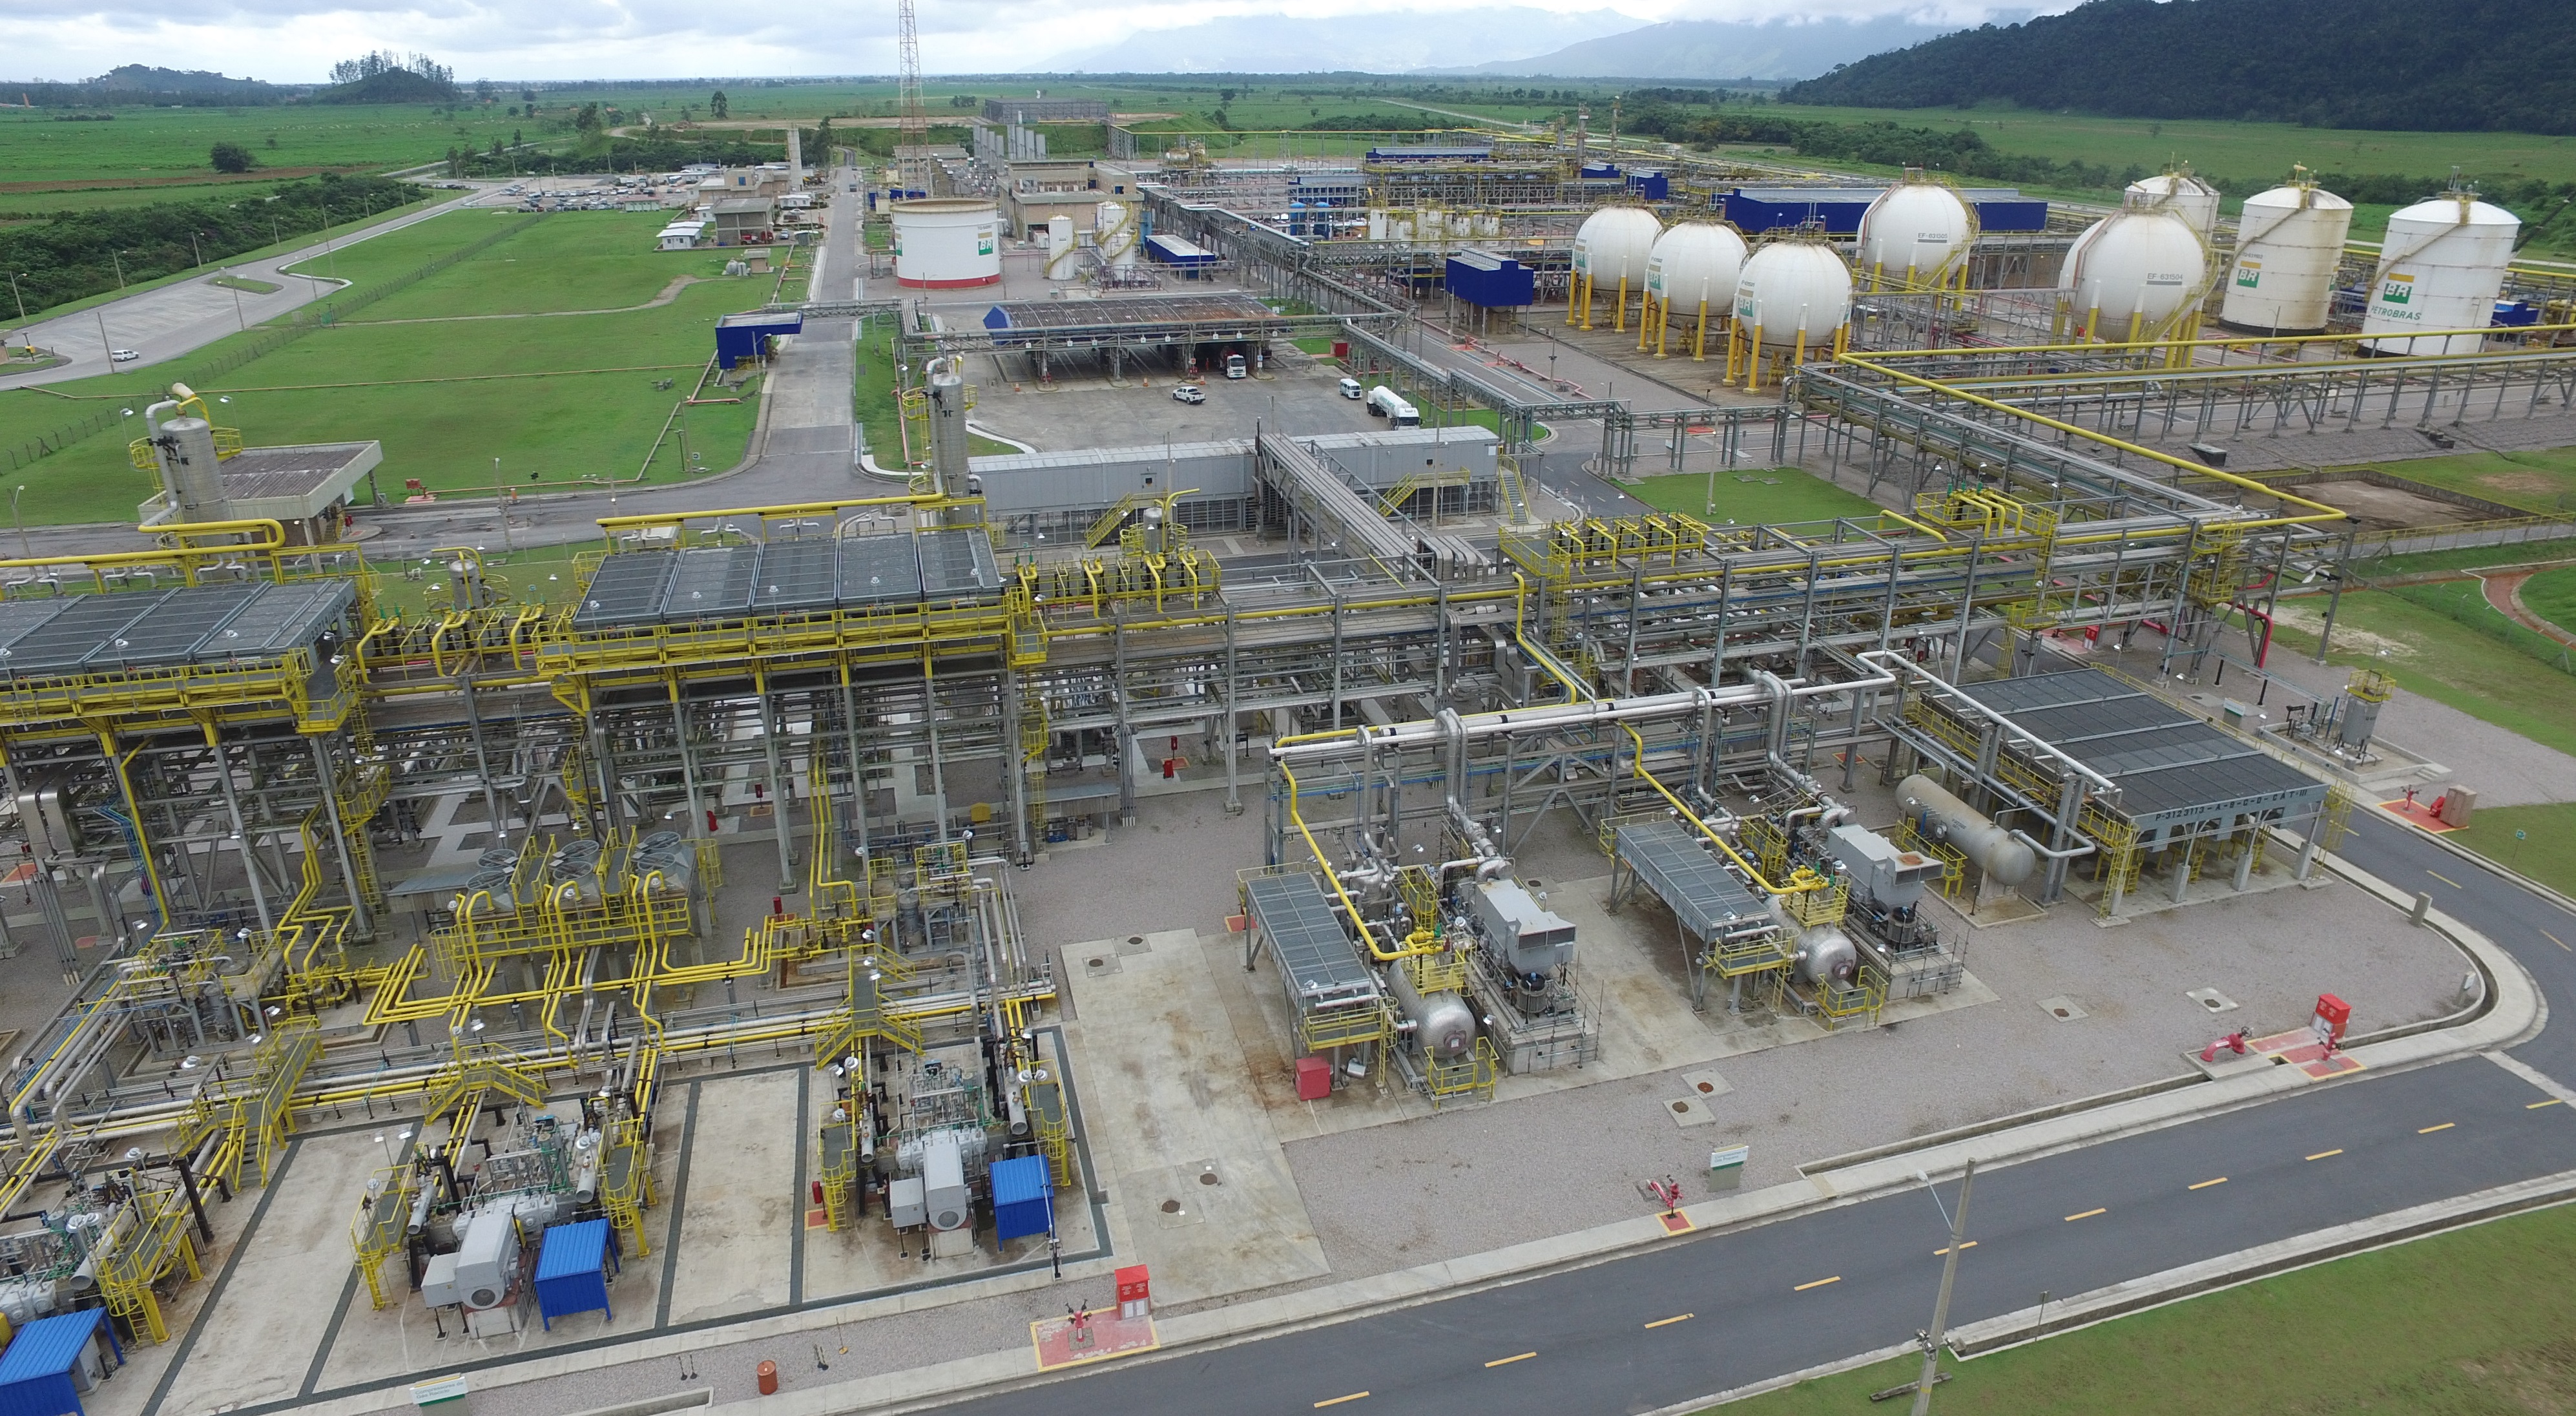 Drone image of Petrobras gas treatment plant